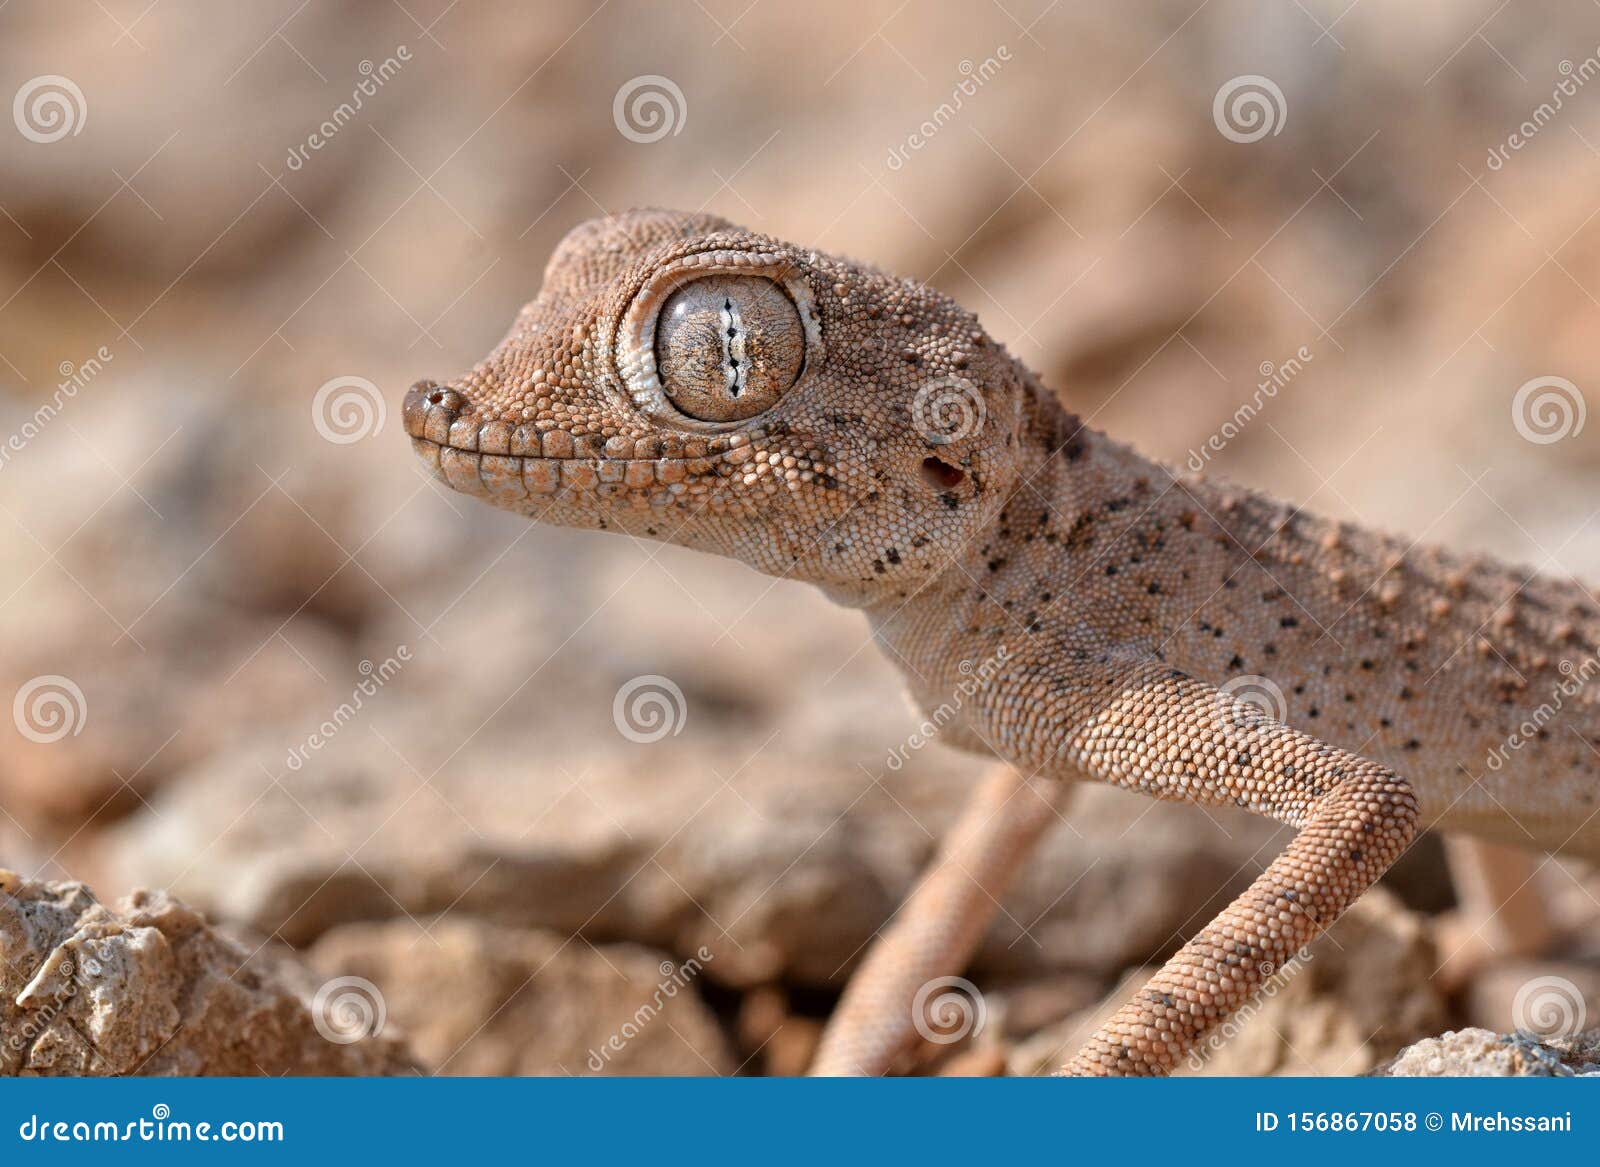 the persian spider gecko, agamura persica